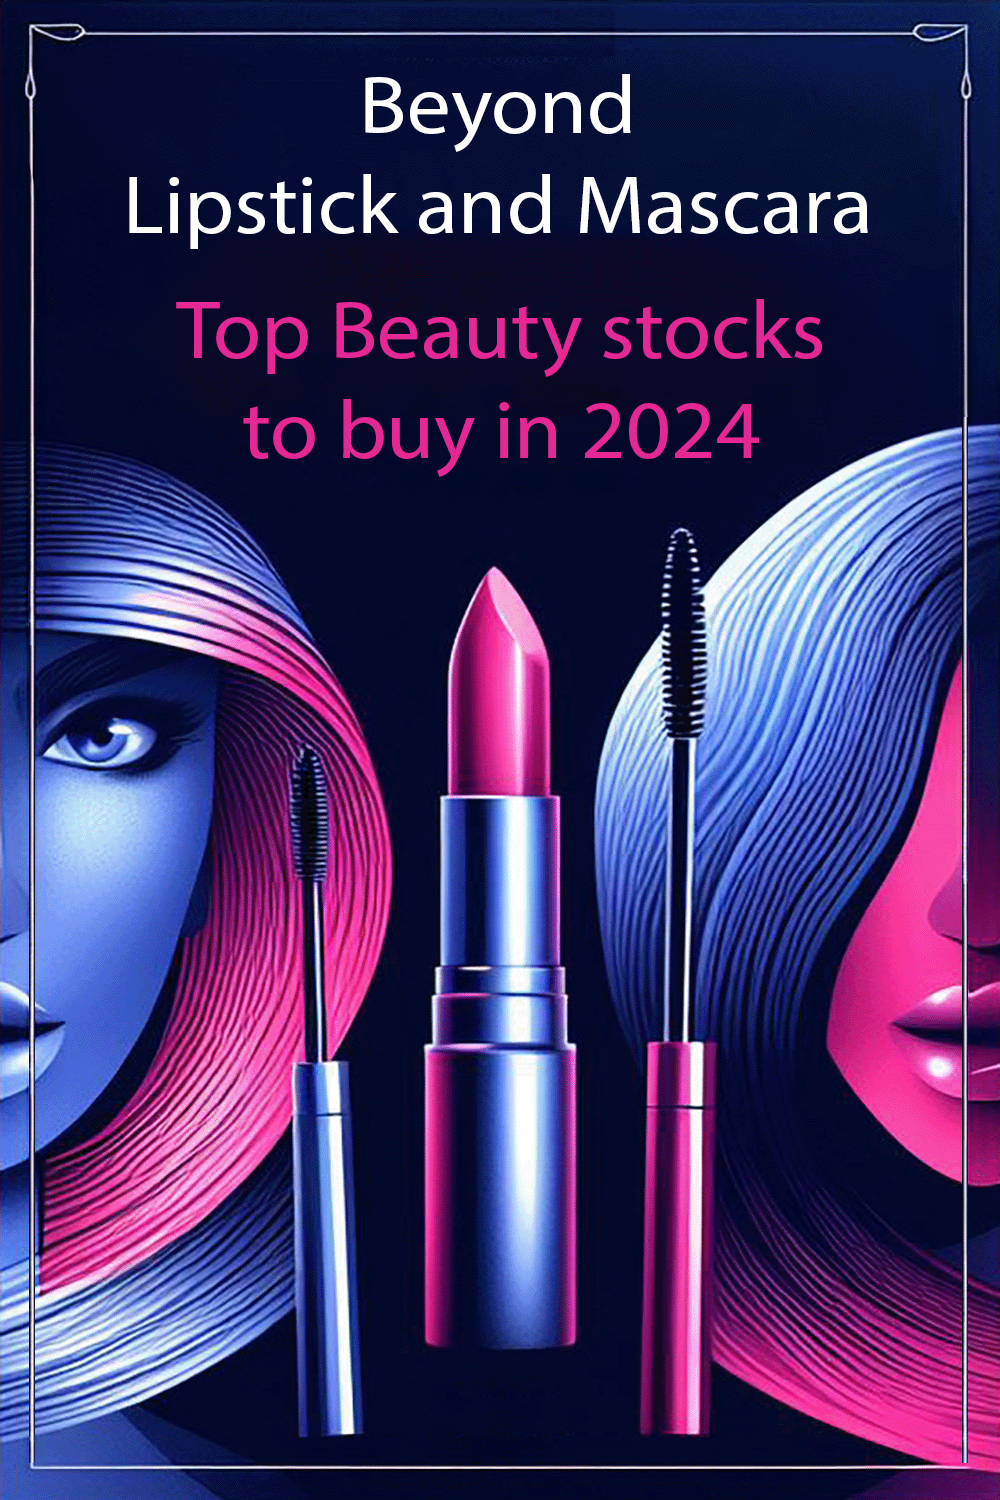 Beyond lipstick and mascara: Top beauty stocks to buy (2024)